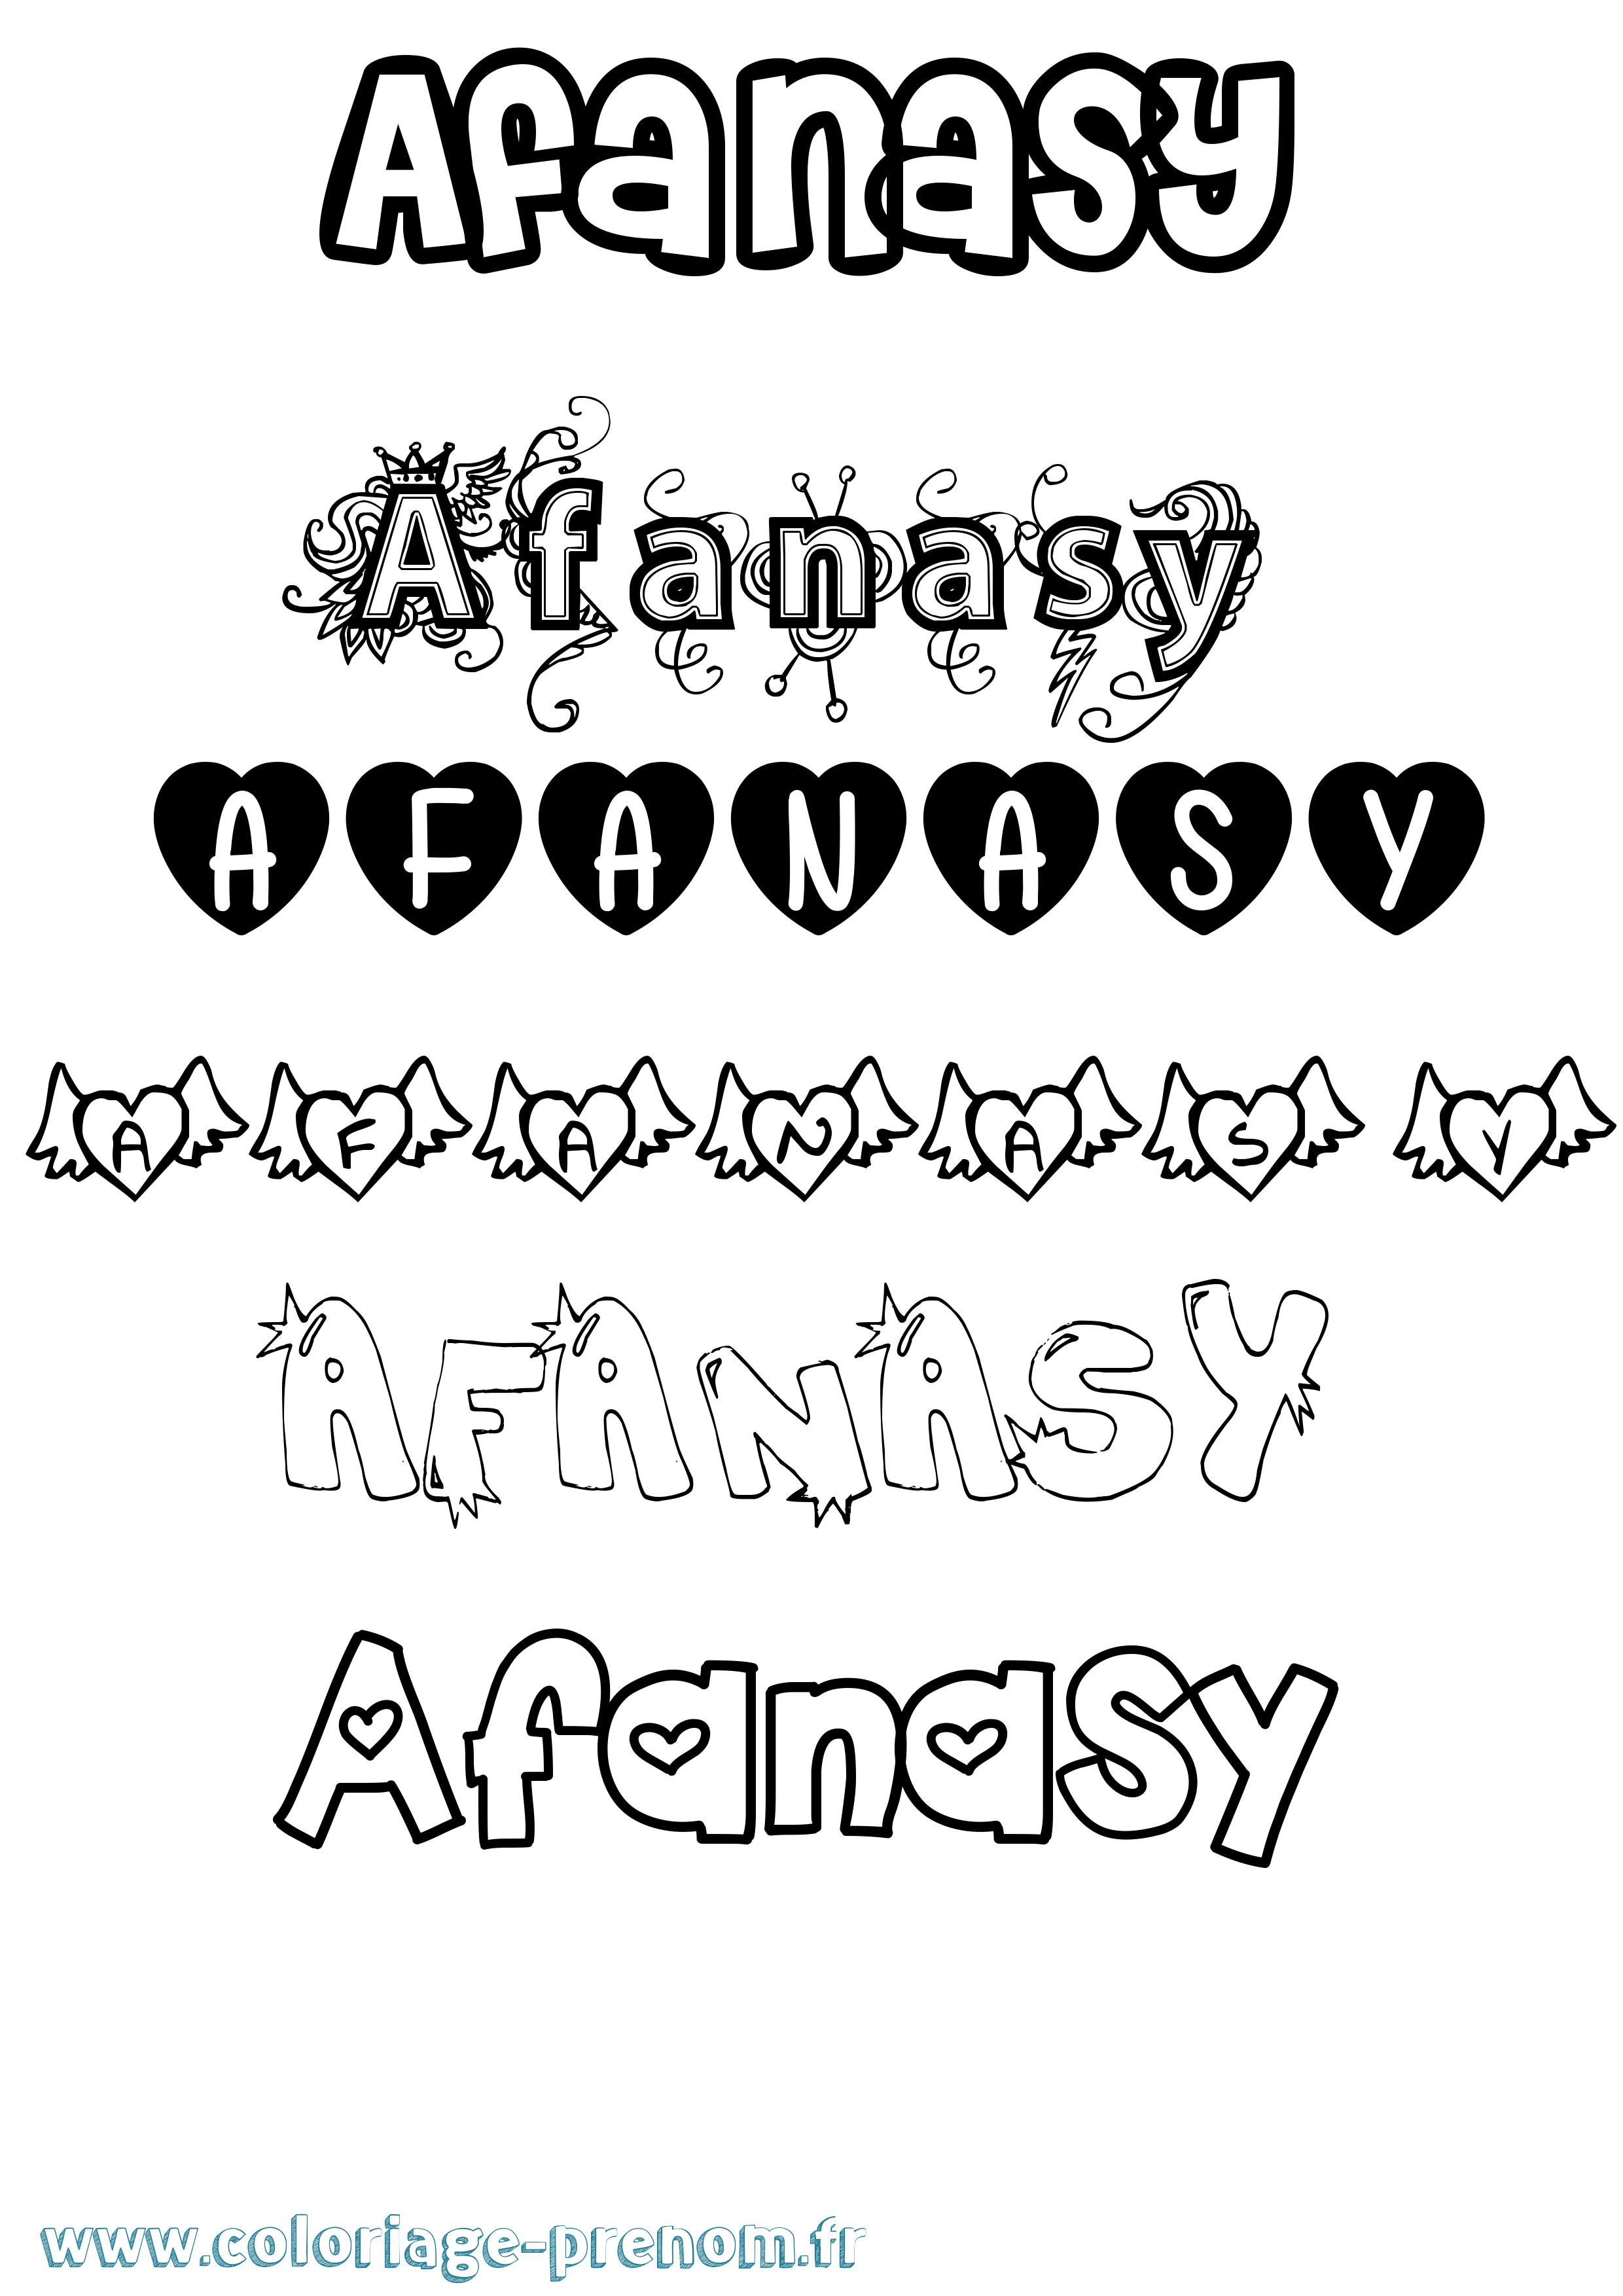 Coloriage prénom Afanasy Girly